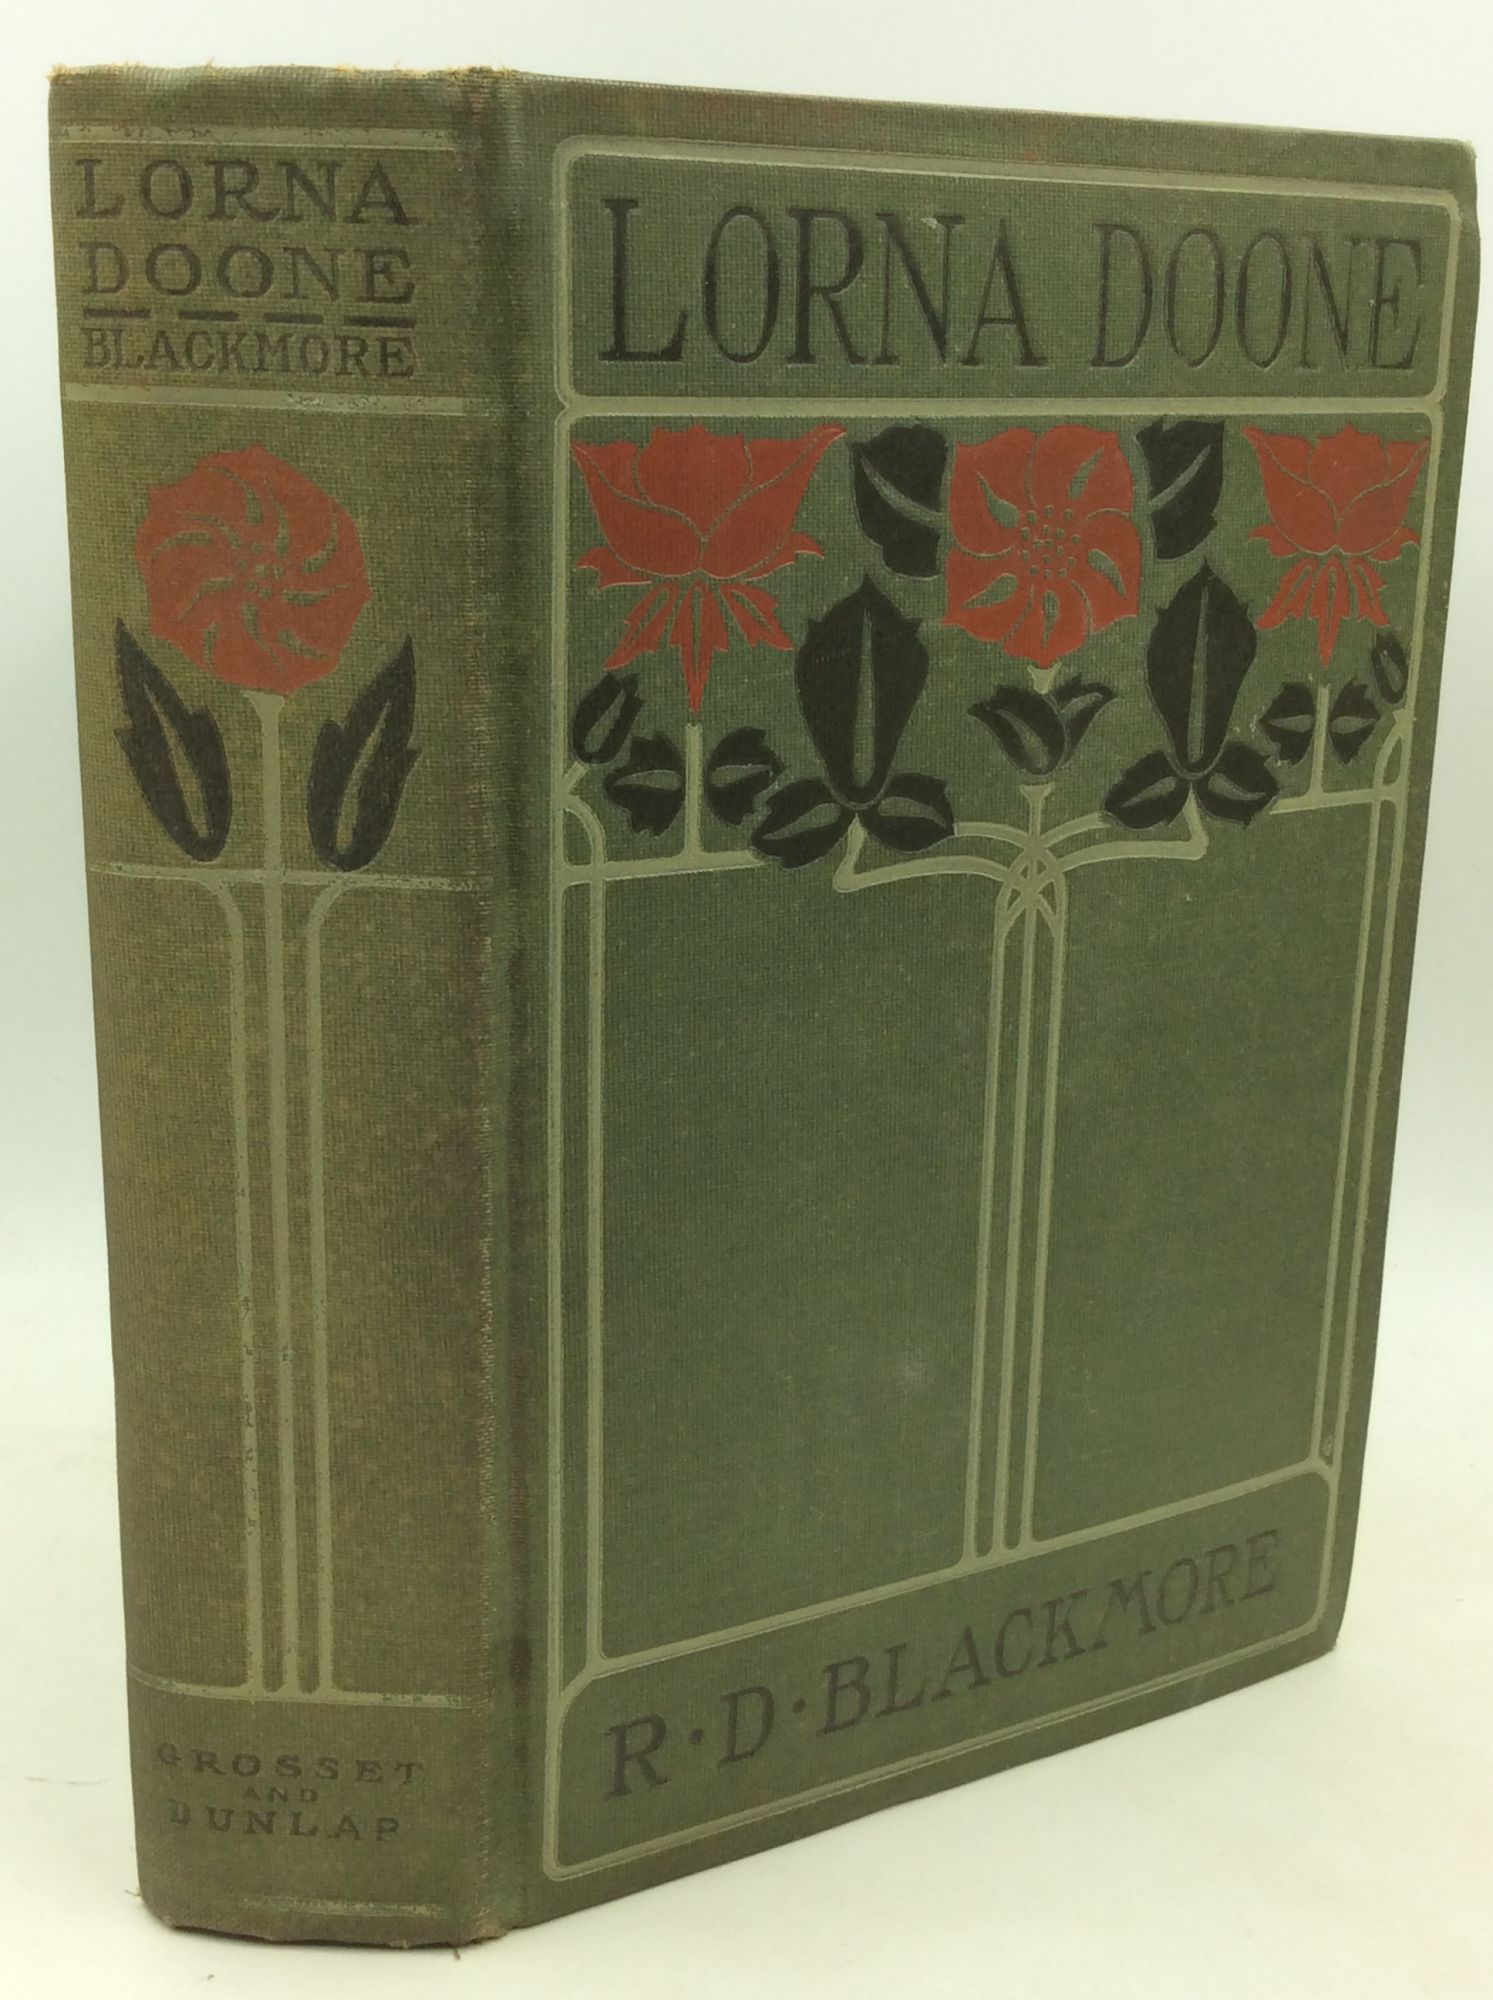 Lorna Doone book image